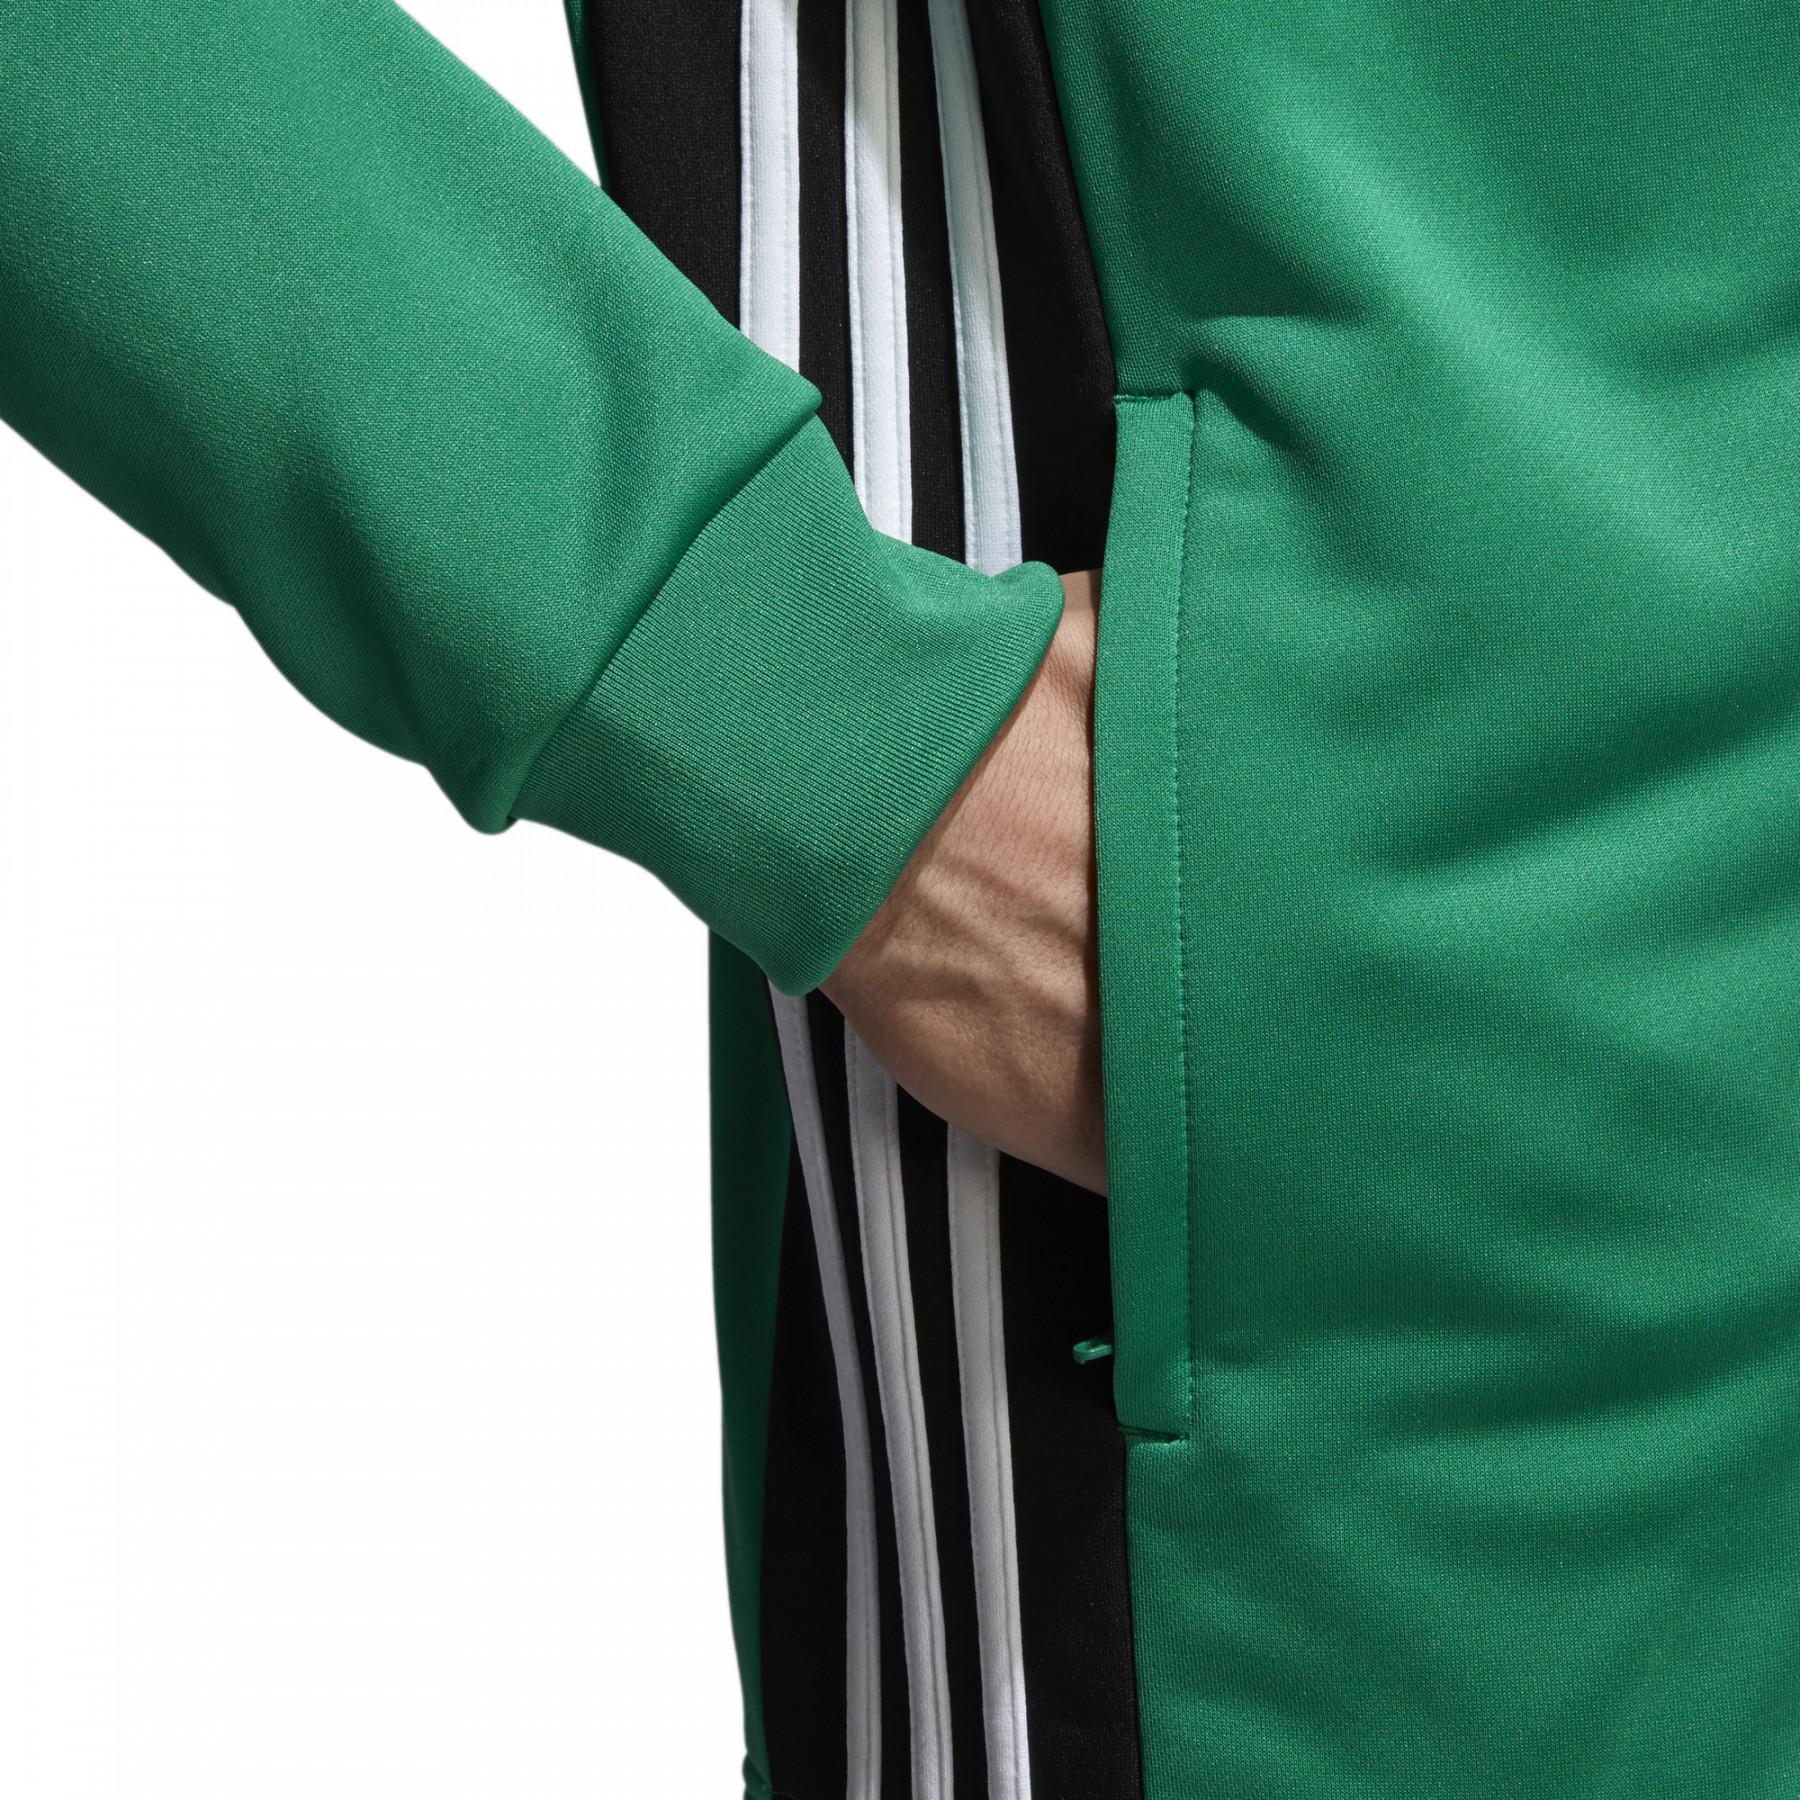 Зеленая кофта адидас с молнией. Adidas tiro sub Green. Adidas Training кофты, зелено коричневый. Рубашка адидас зеленая ветровка. Материал адидас